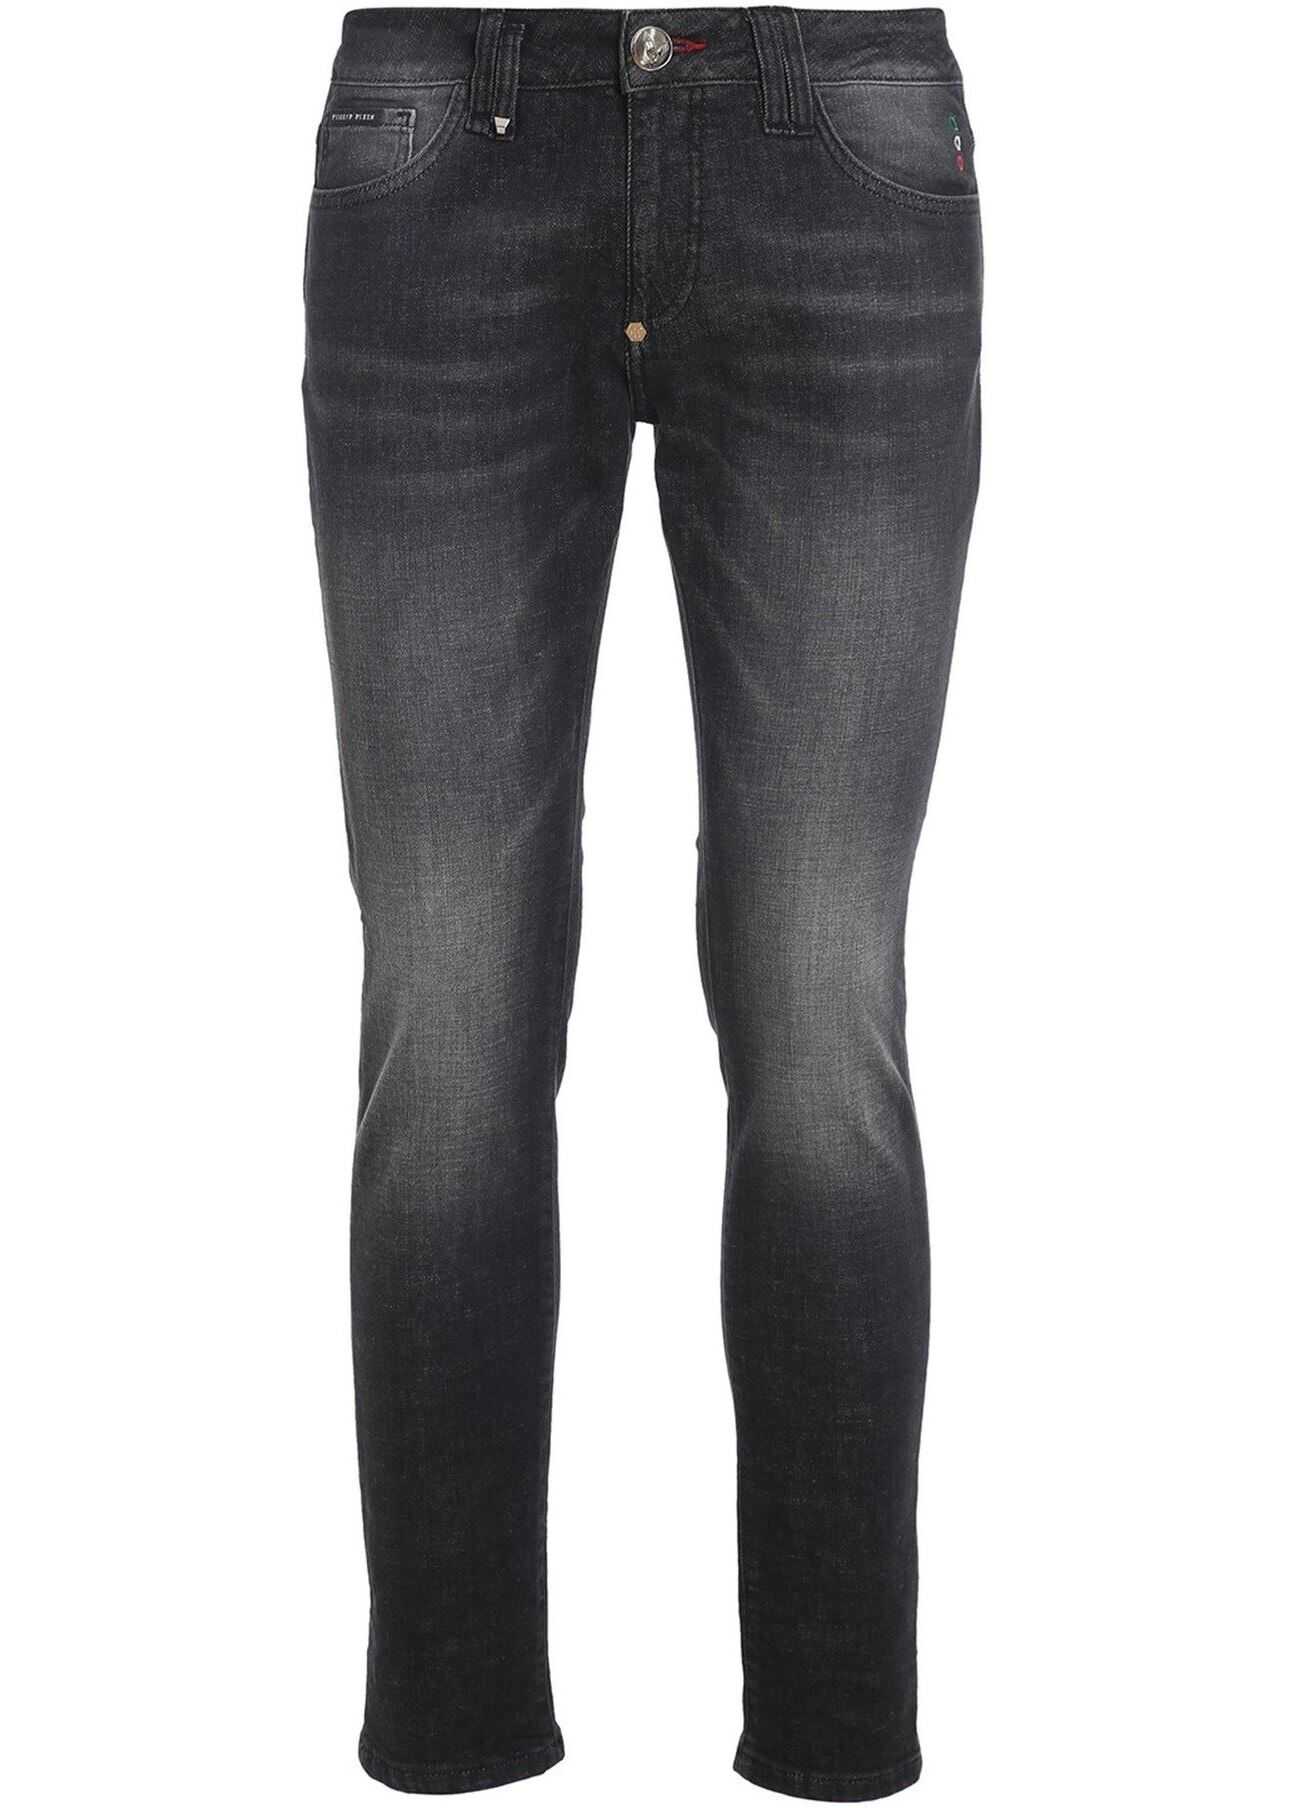 Philipp Plein Stretch Denim Cotton Jeans Black imagine